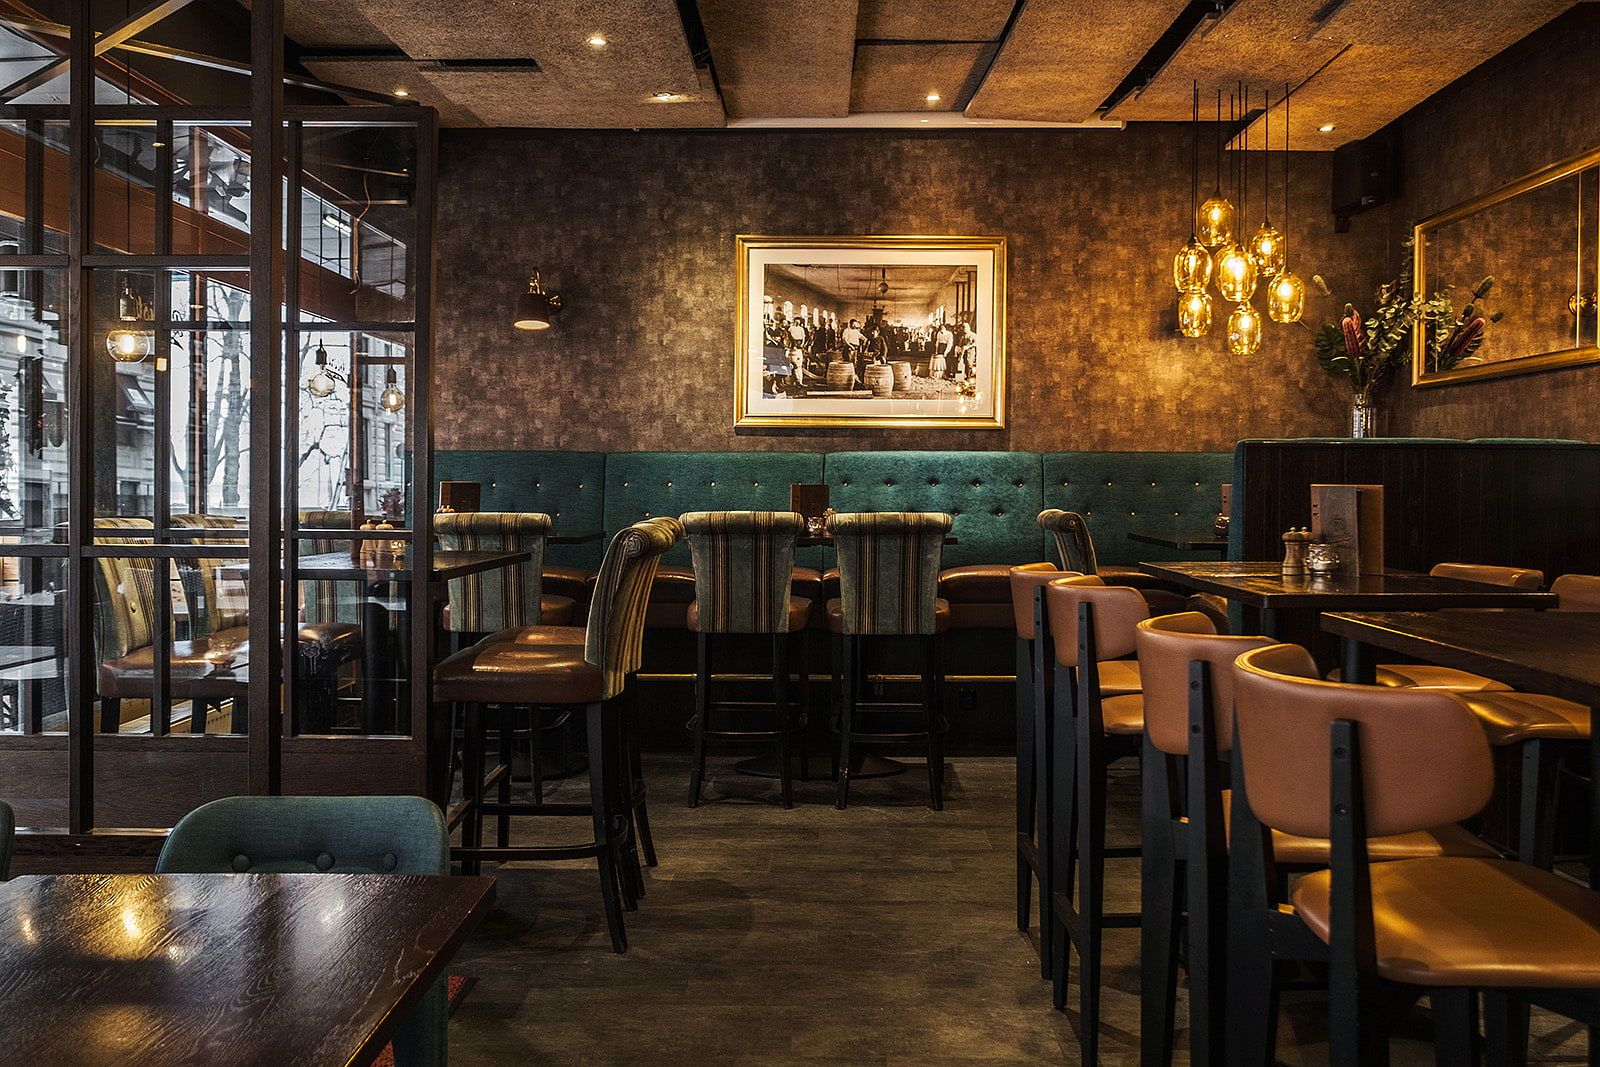 Beerista Avenyn – Restauranger nära evenemangsstråket